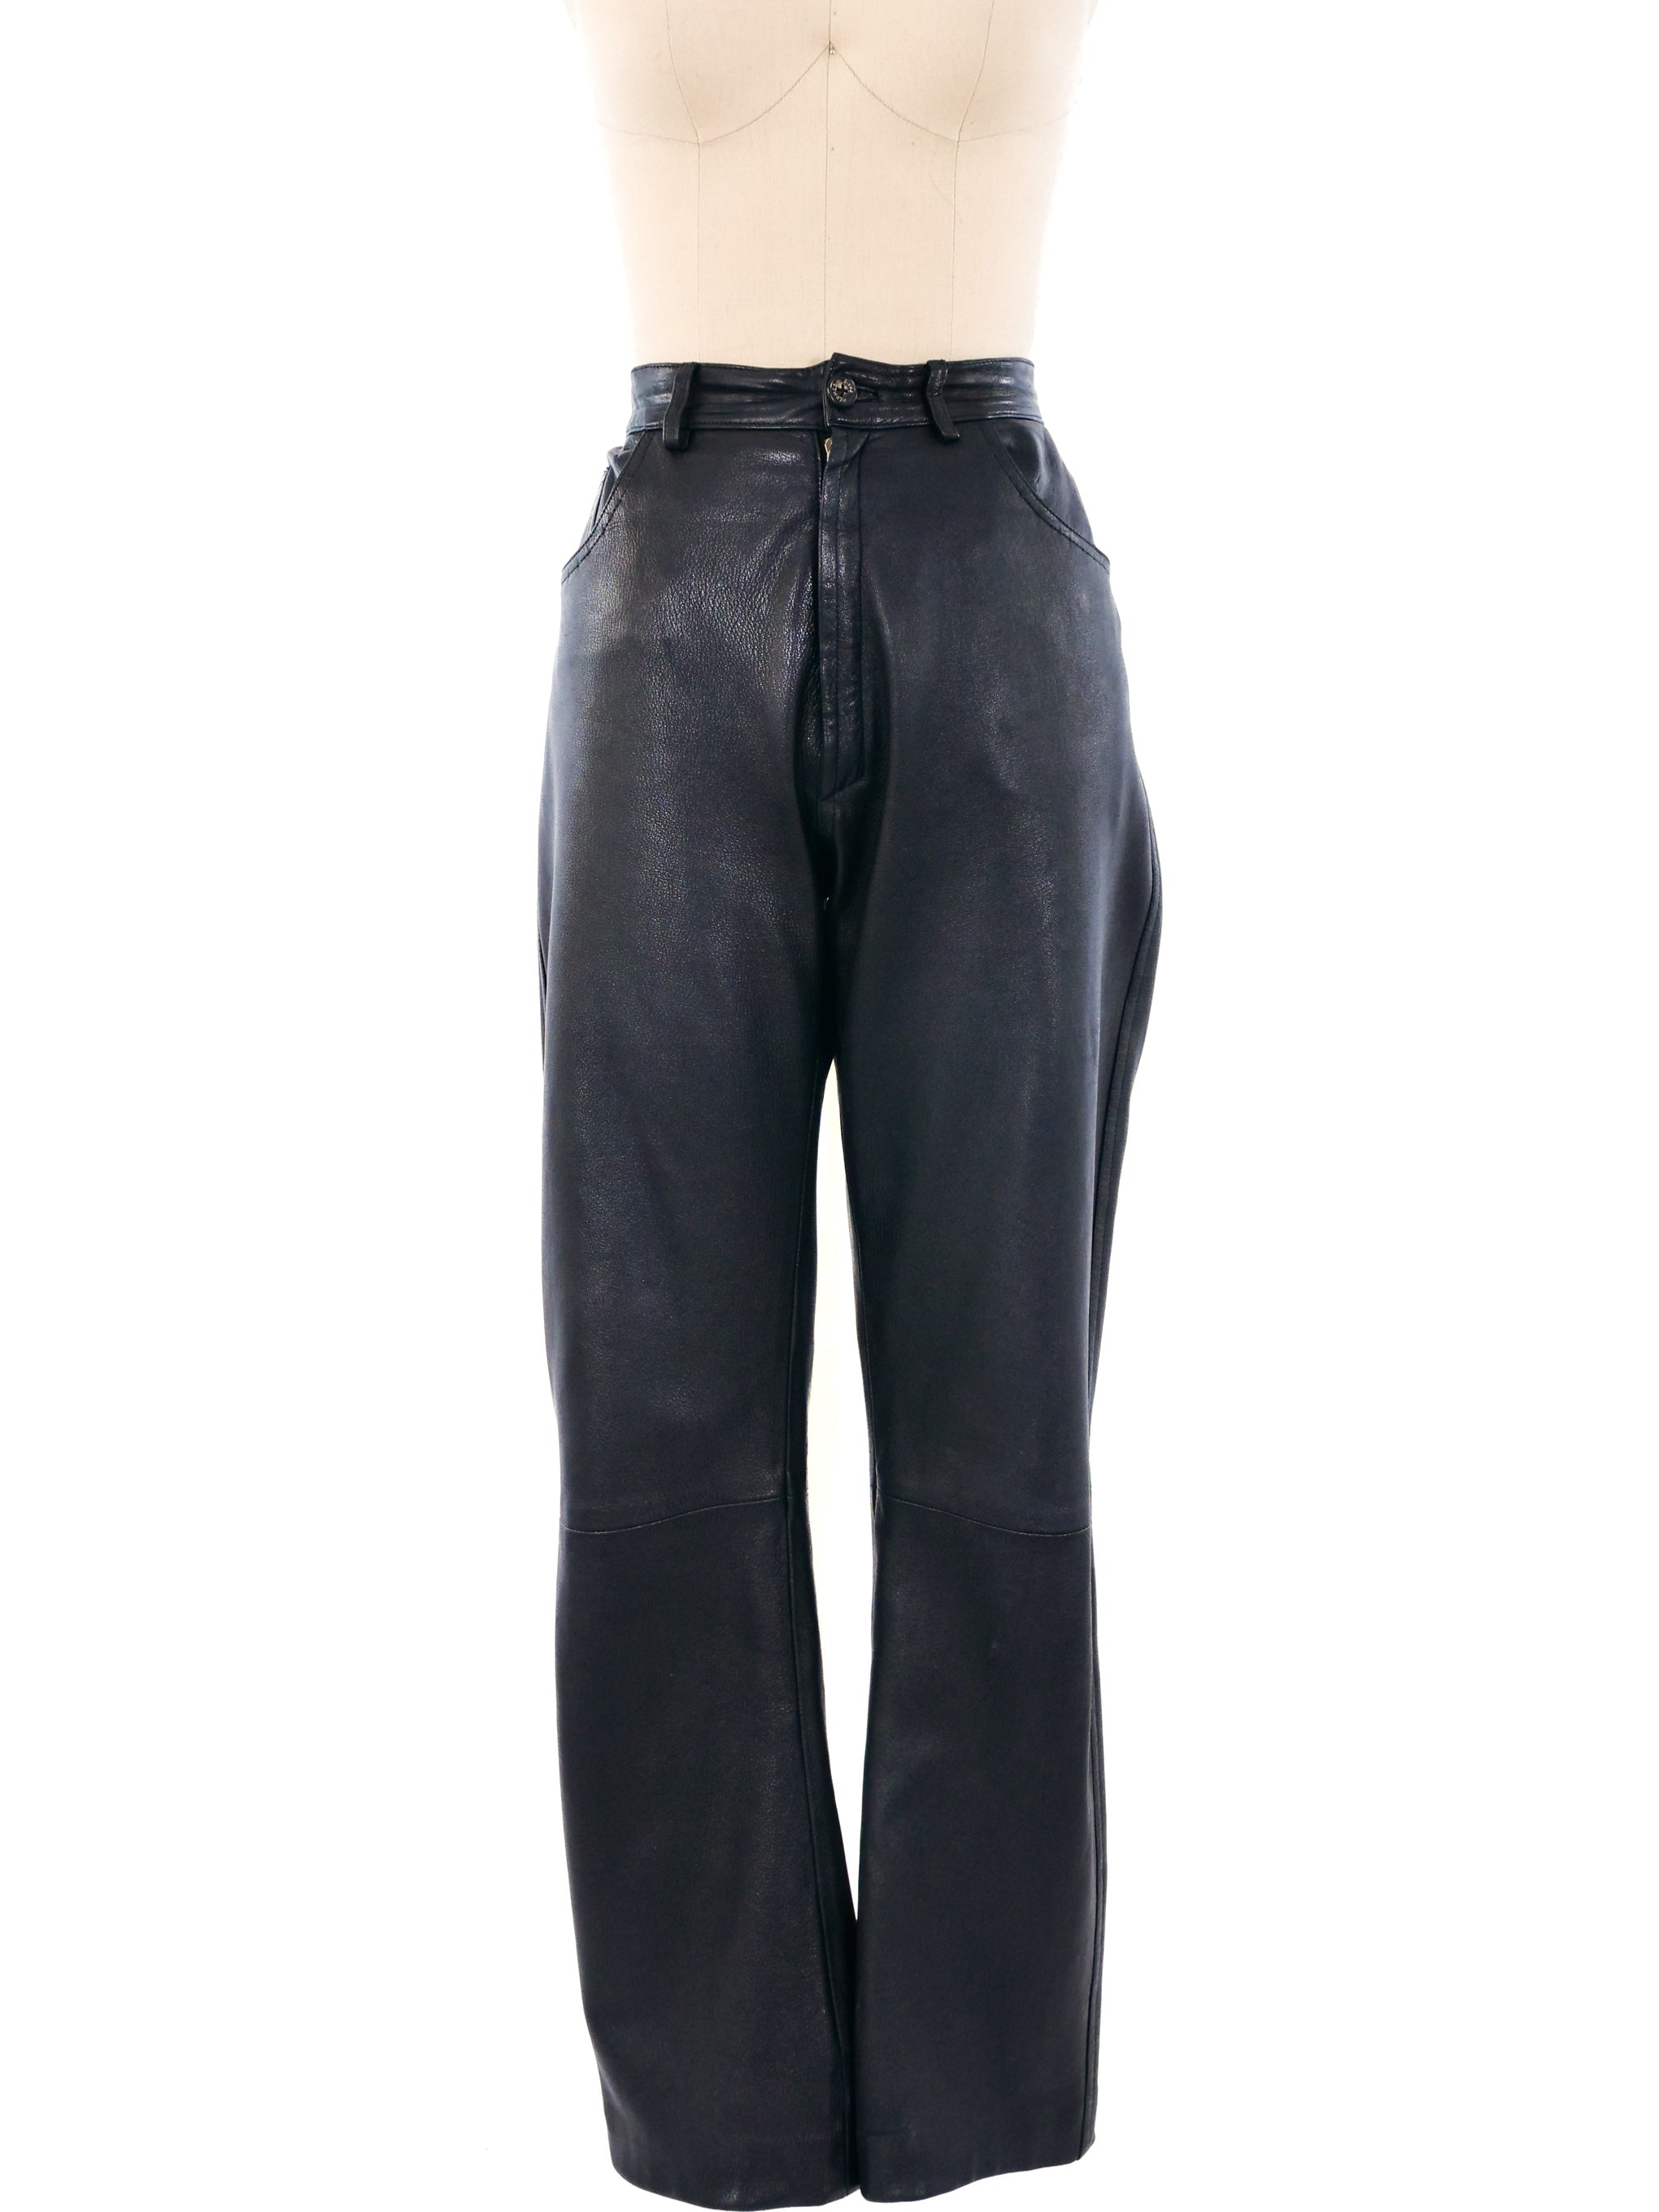 Brown Leather Pants Womens Pure Lambskin High Waist Custom made Size 0 2 4  6 8